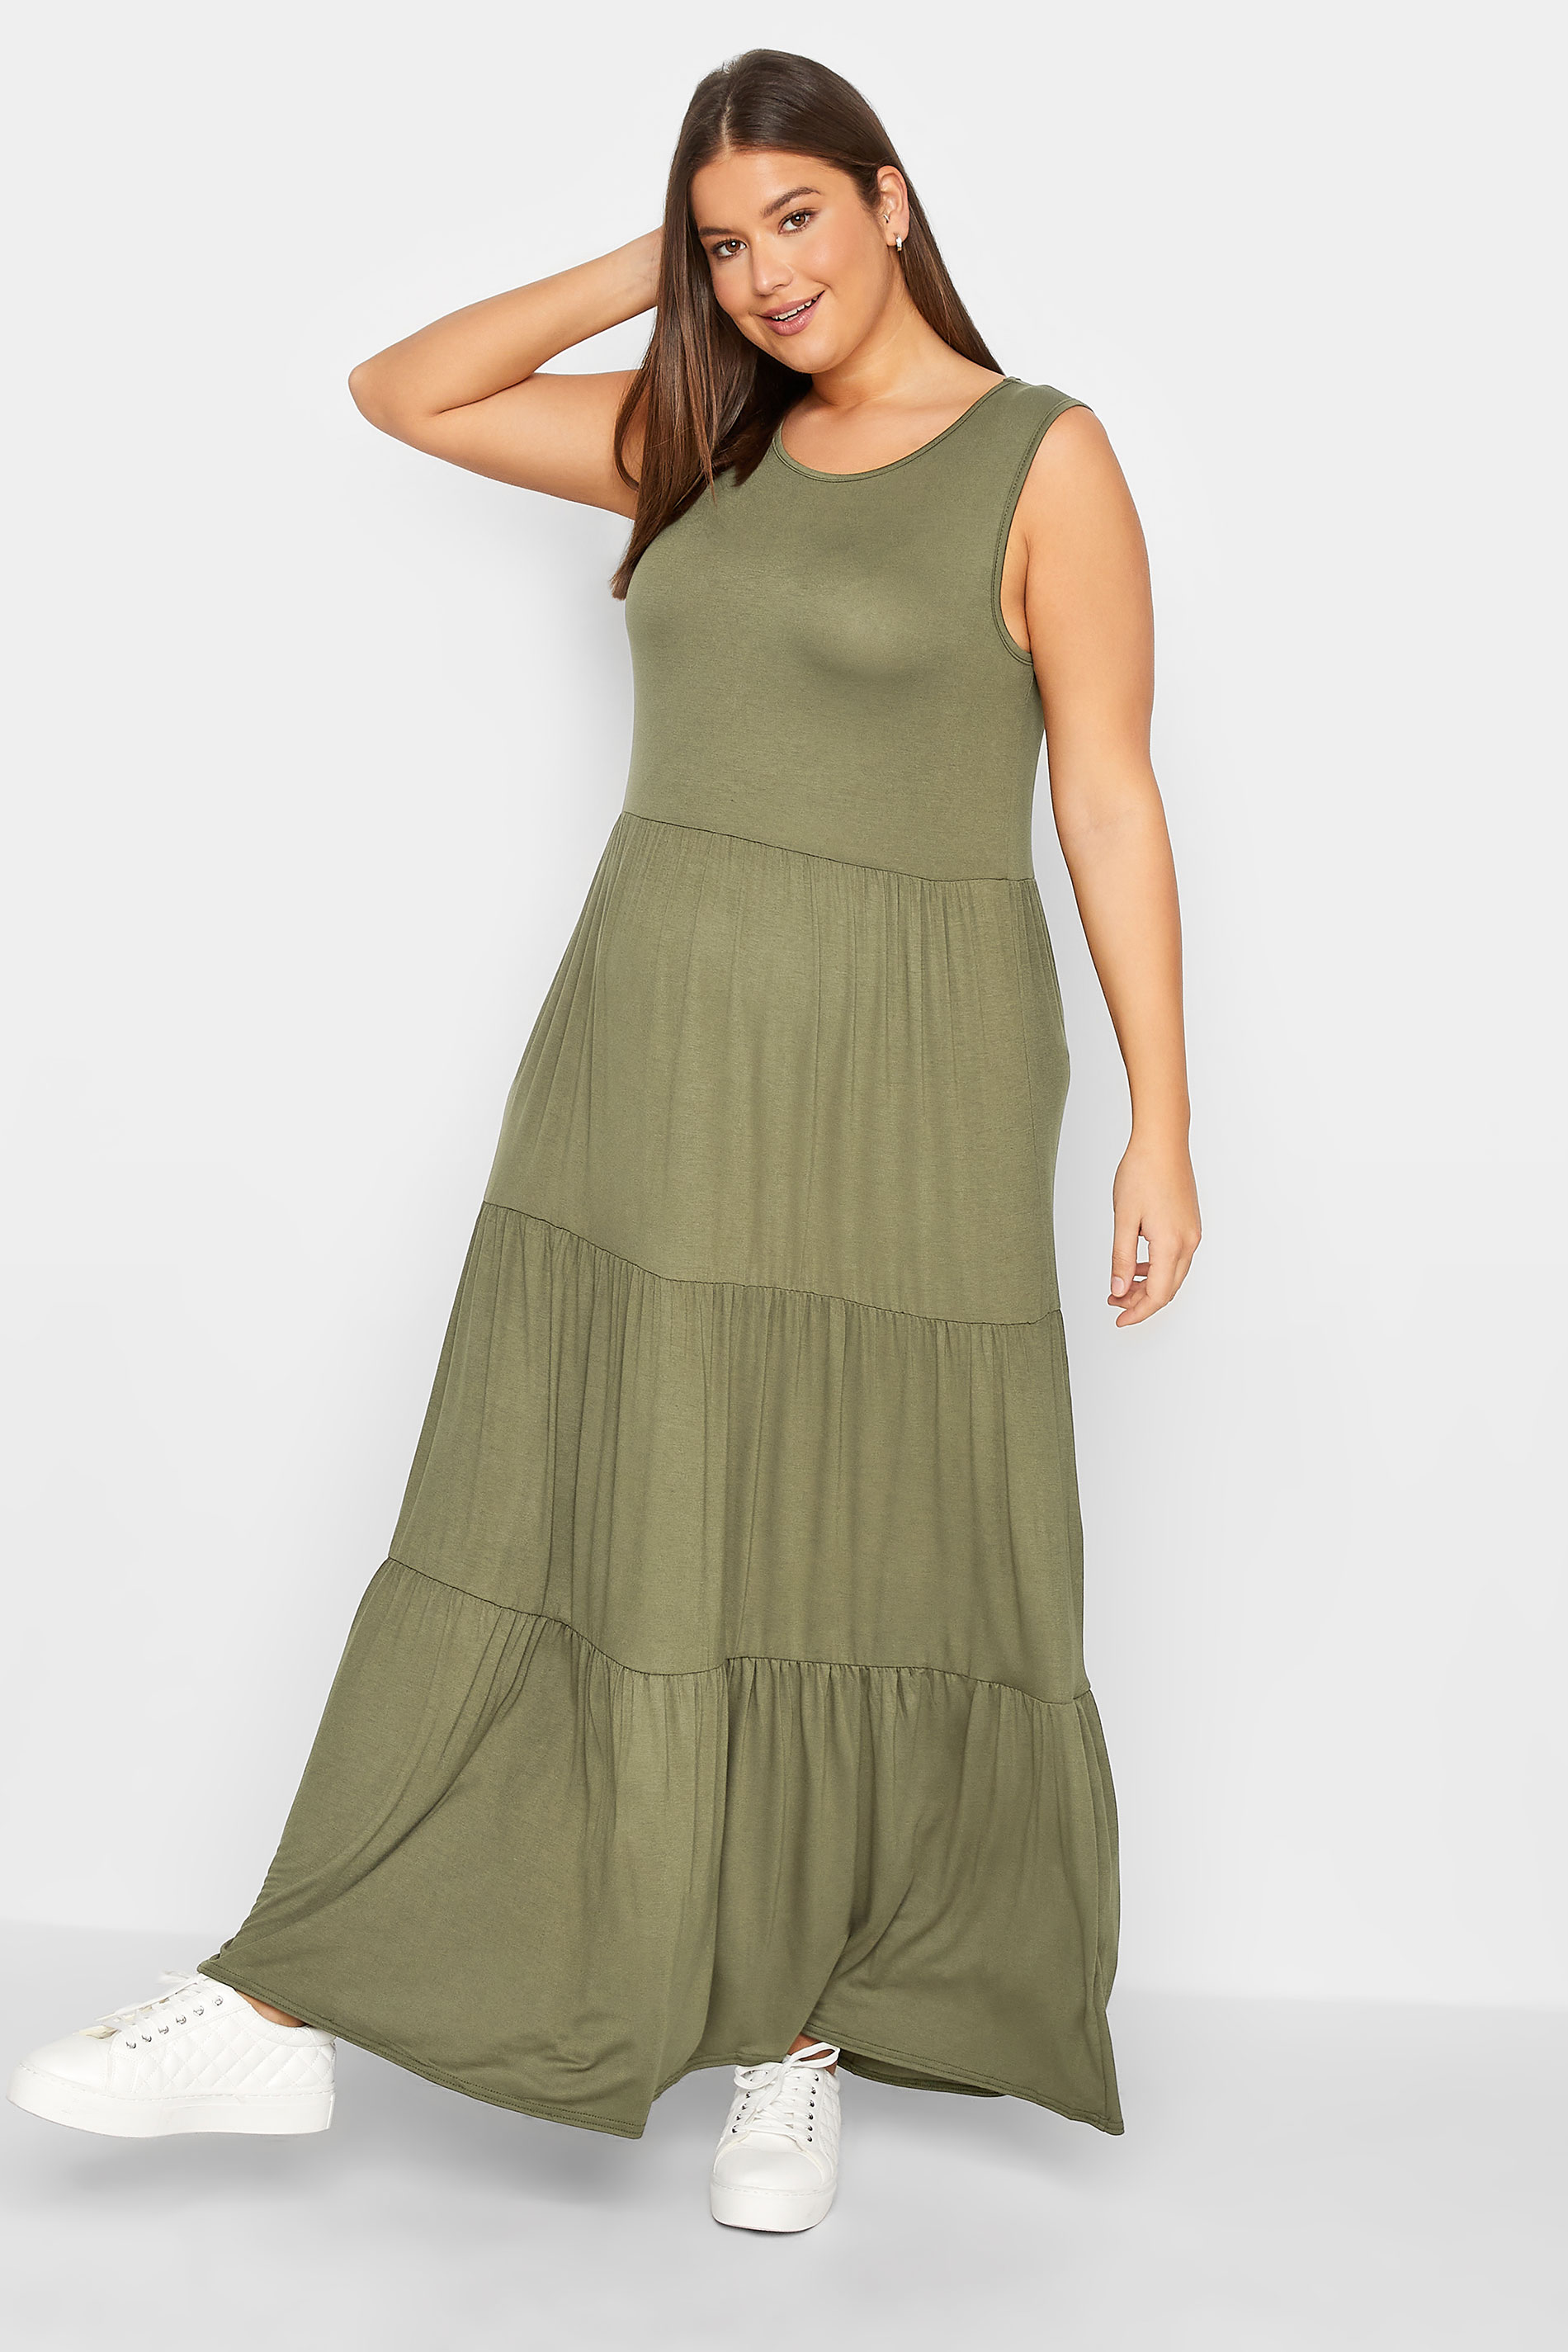 LTS Maternity Khaki Green Tiered Maxi Dress | Long Tall Sally 2